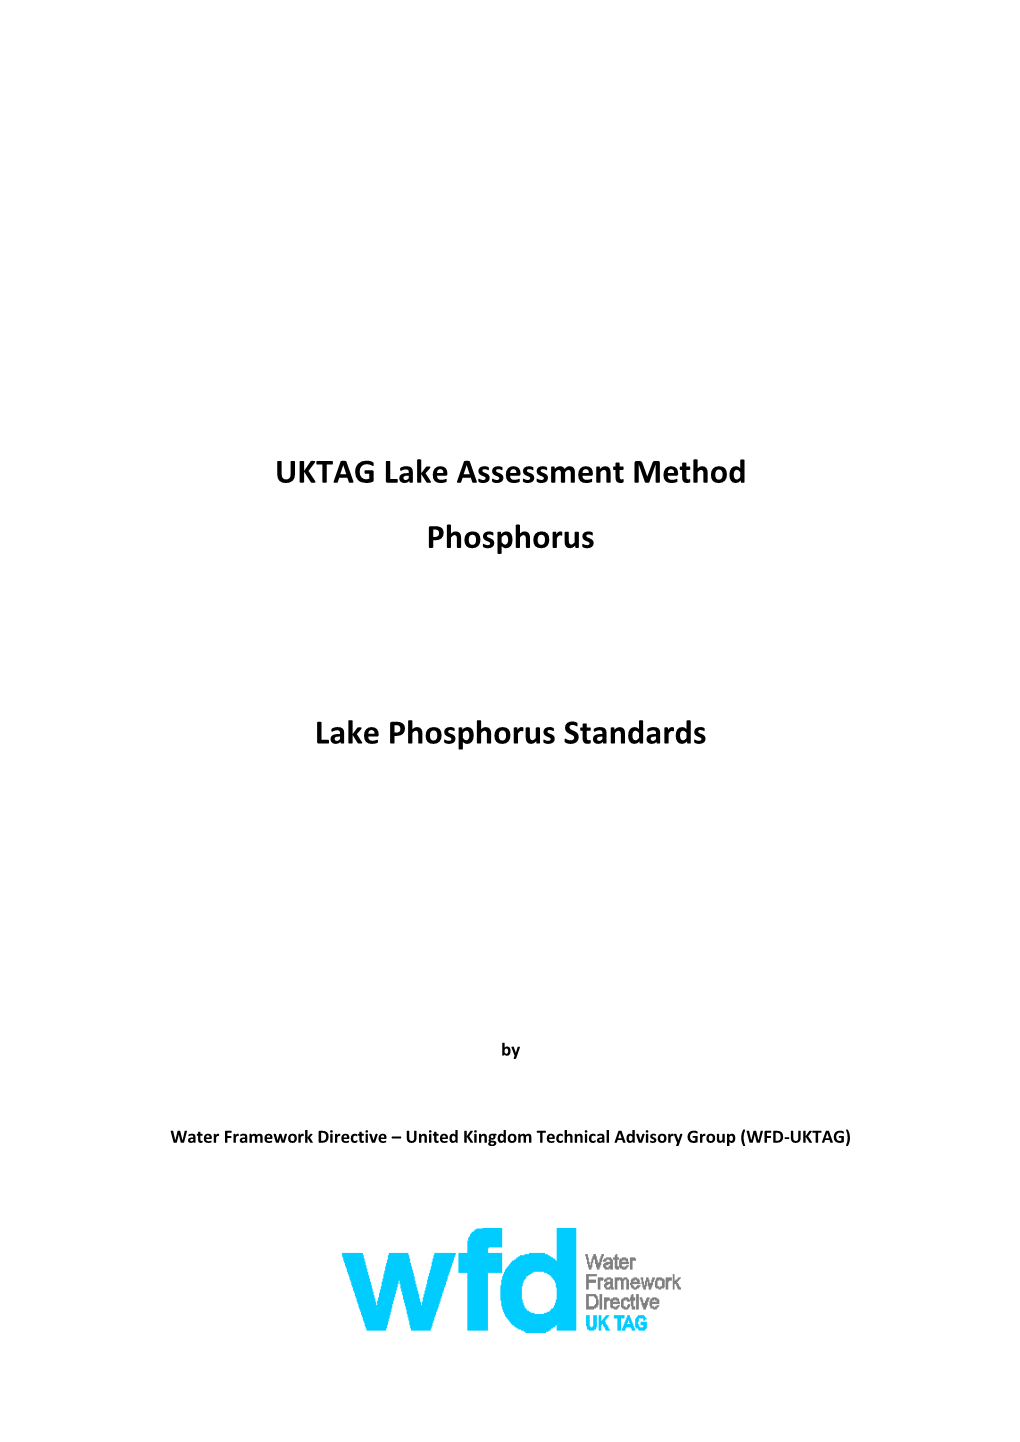 UKTAG Lake Assessment Method Phosphorus